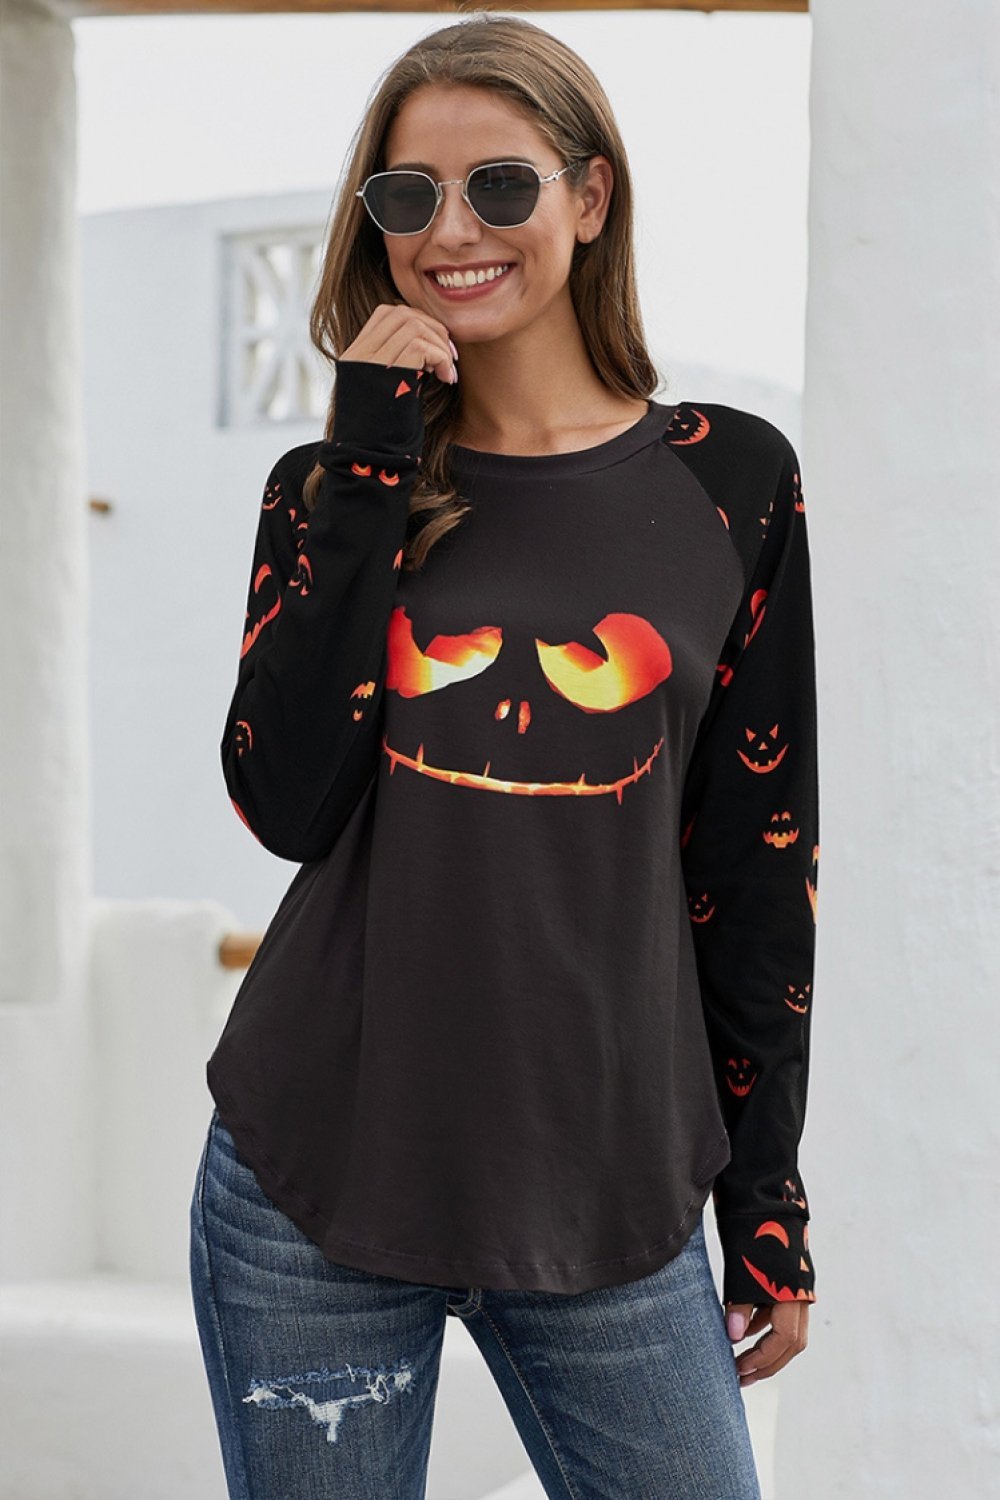 Halloween Round Bottom Edge Sweatshirt - Pavacat